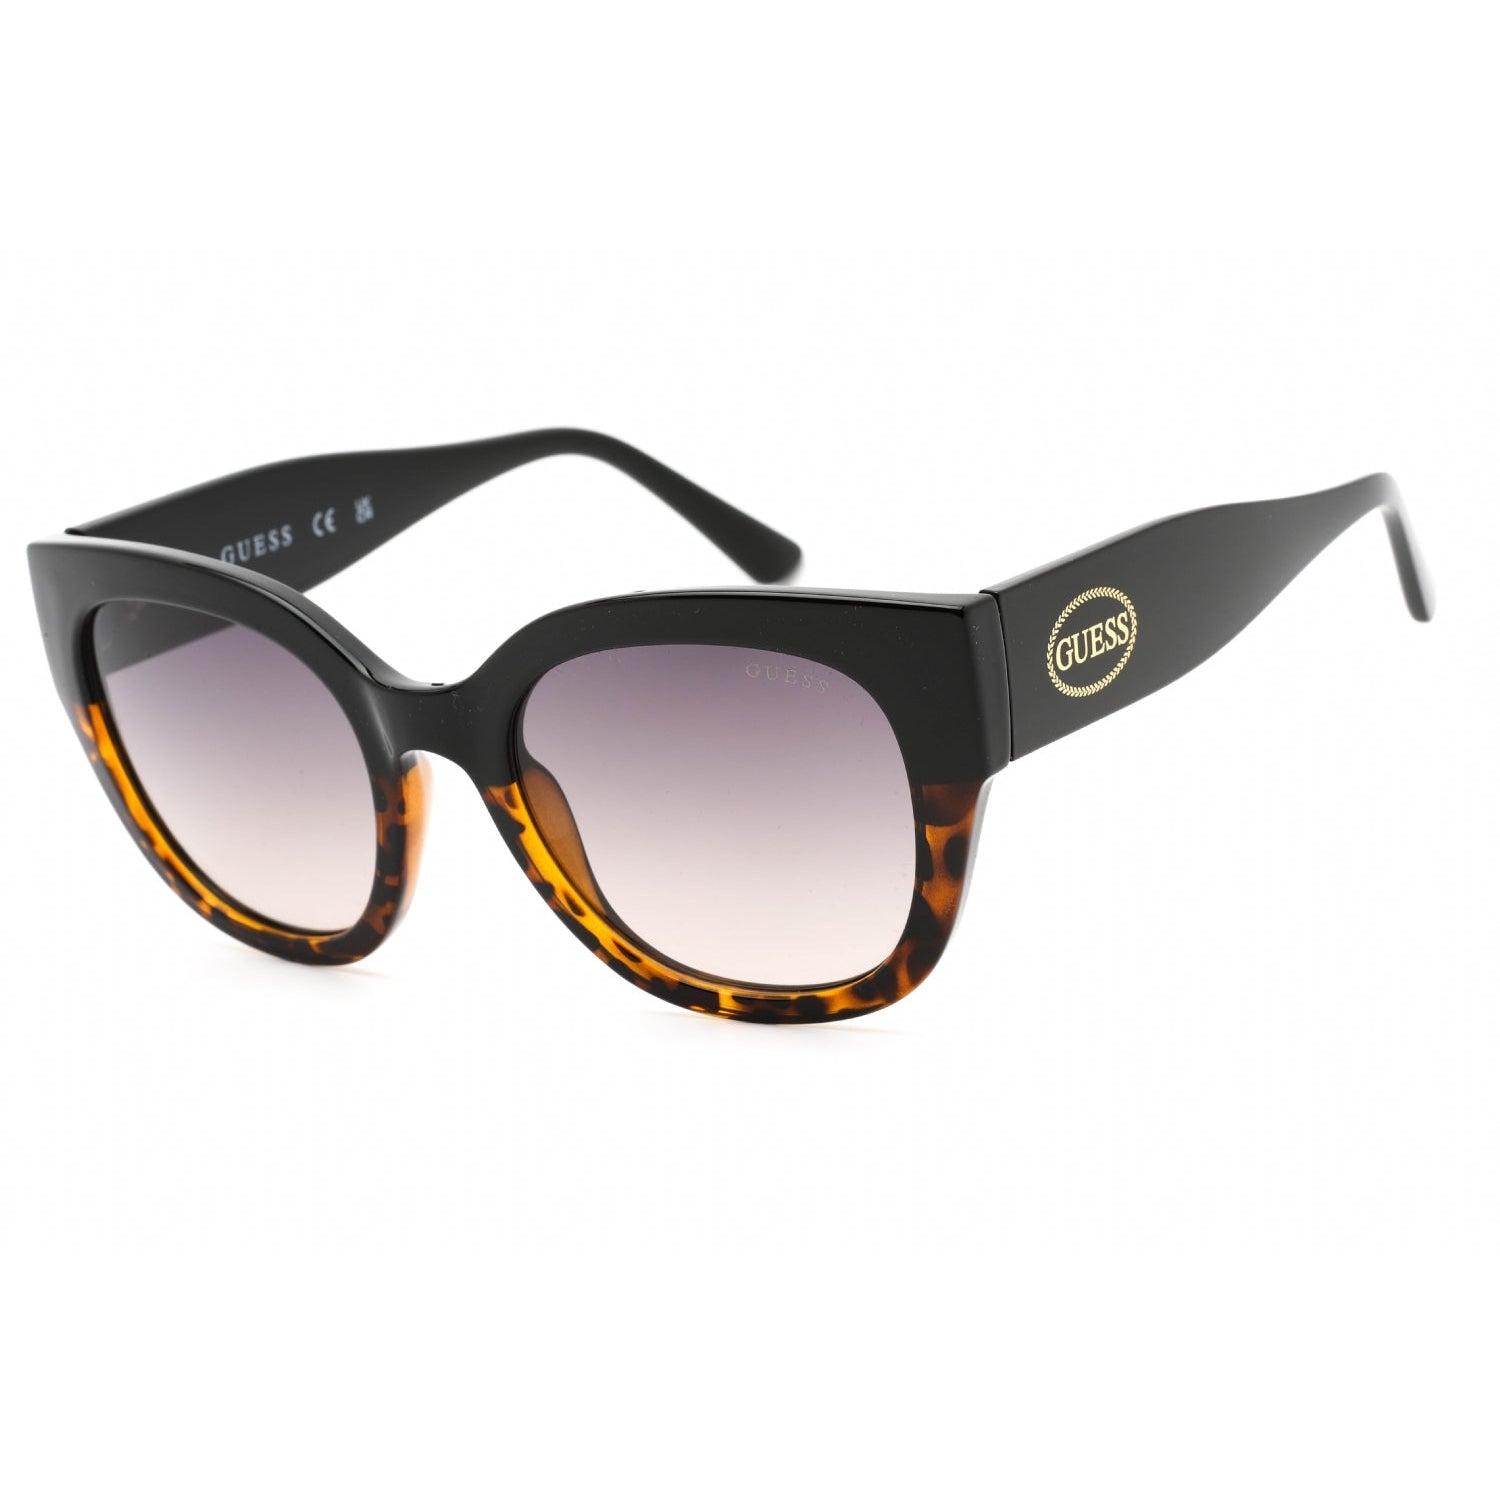 Guess Factory Gf6154 Sunglasses Shiny Black / Gradient Smoke | Lyst